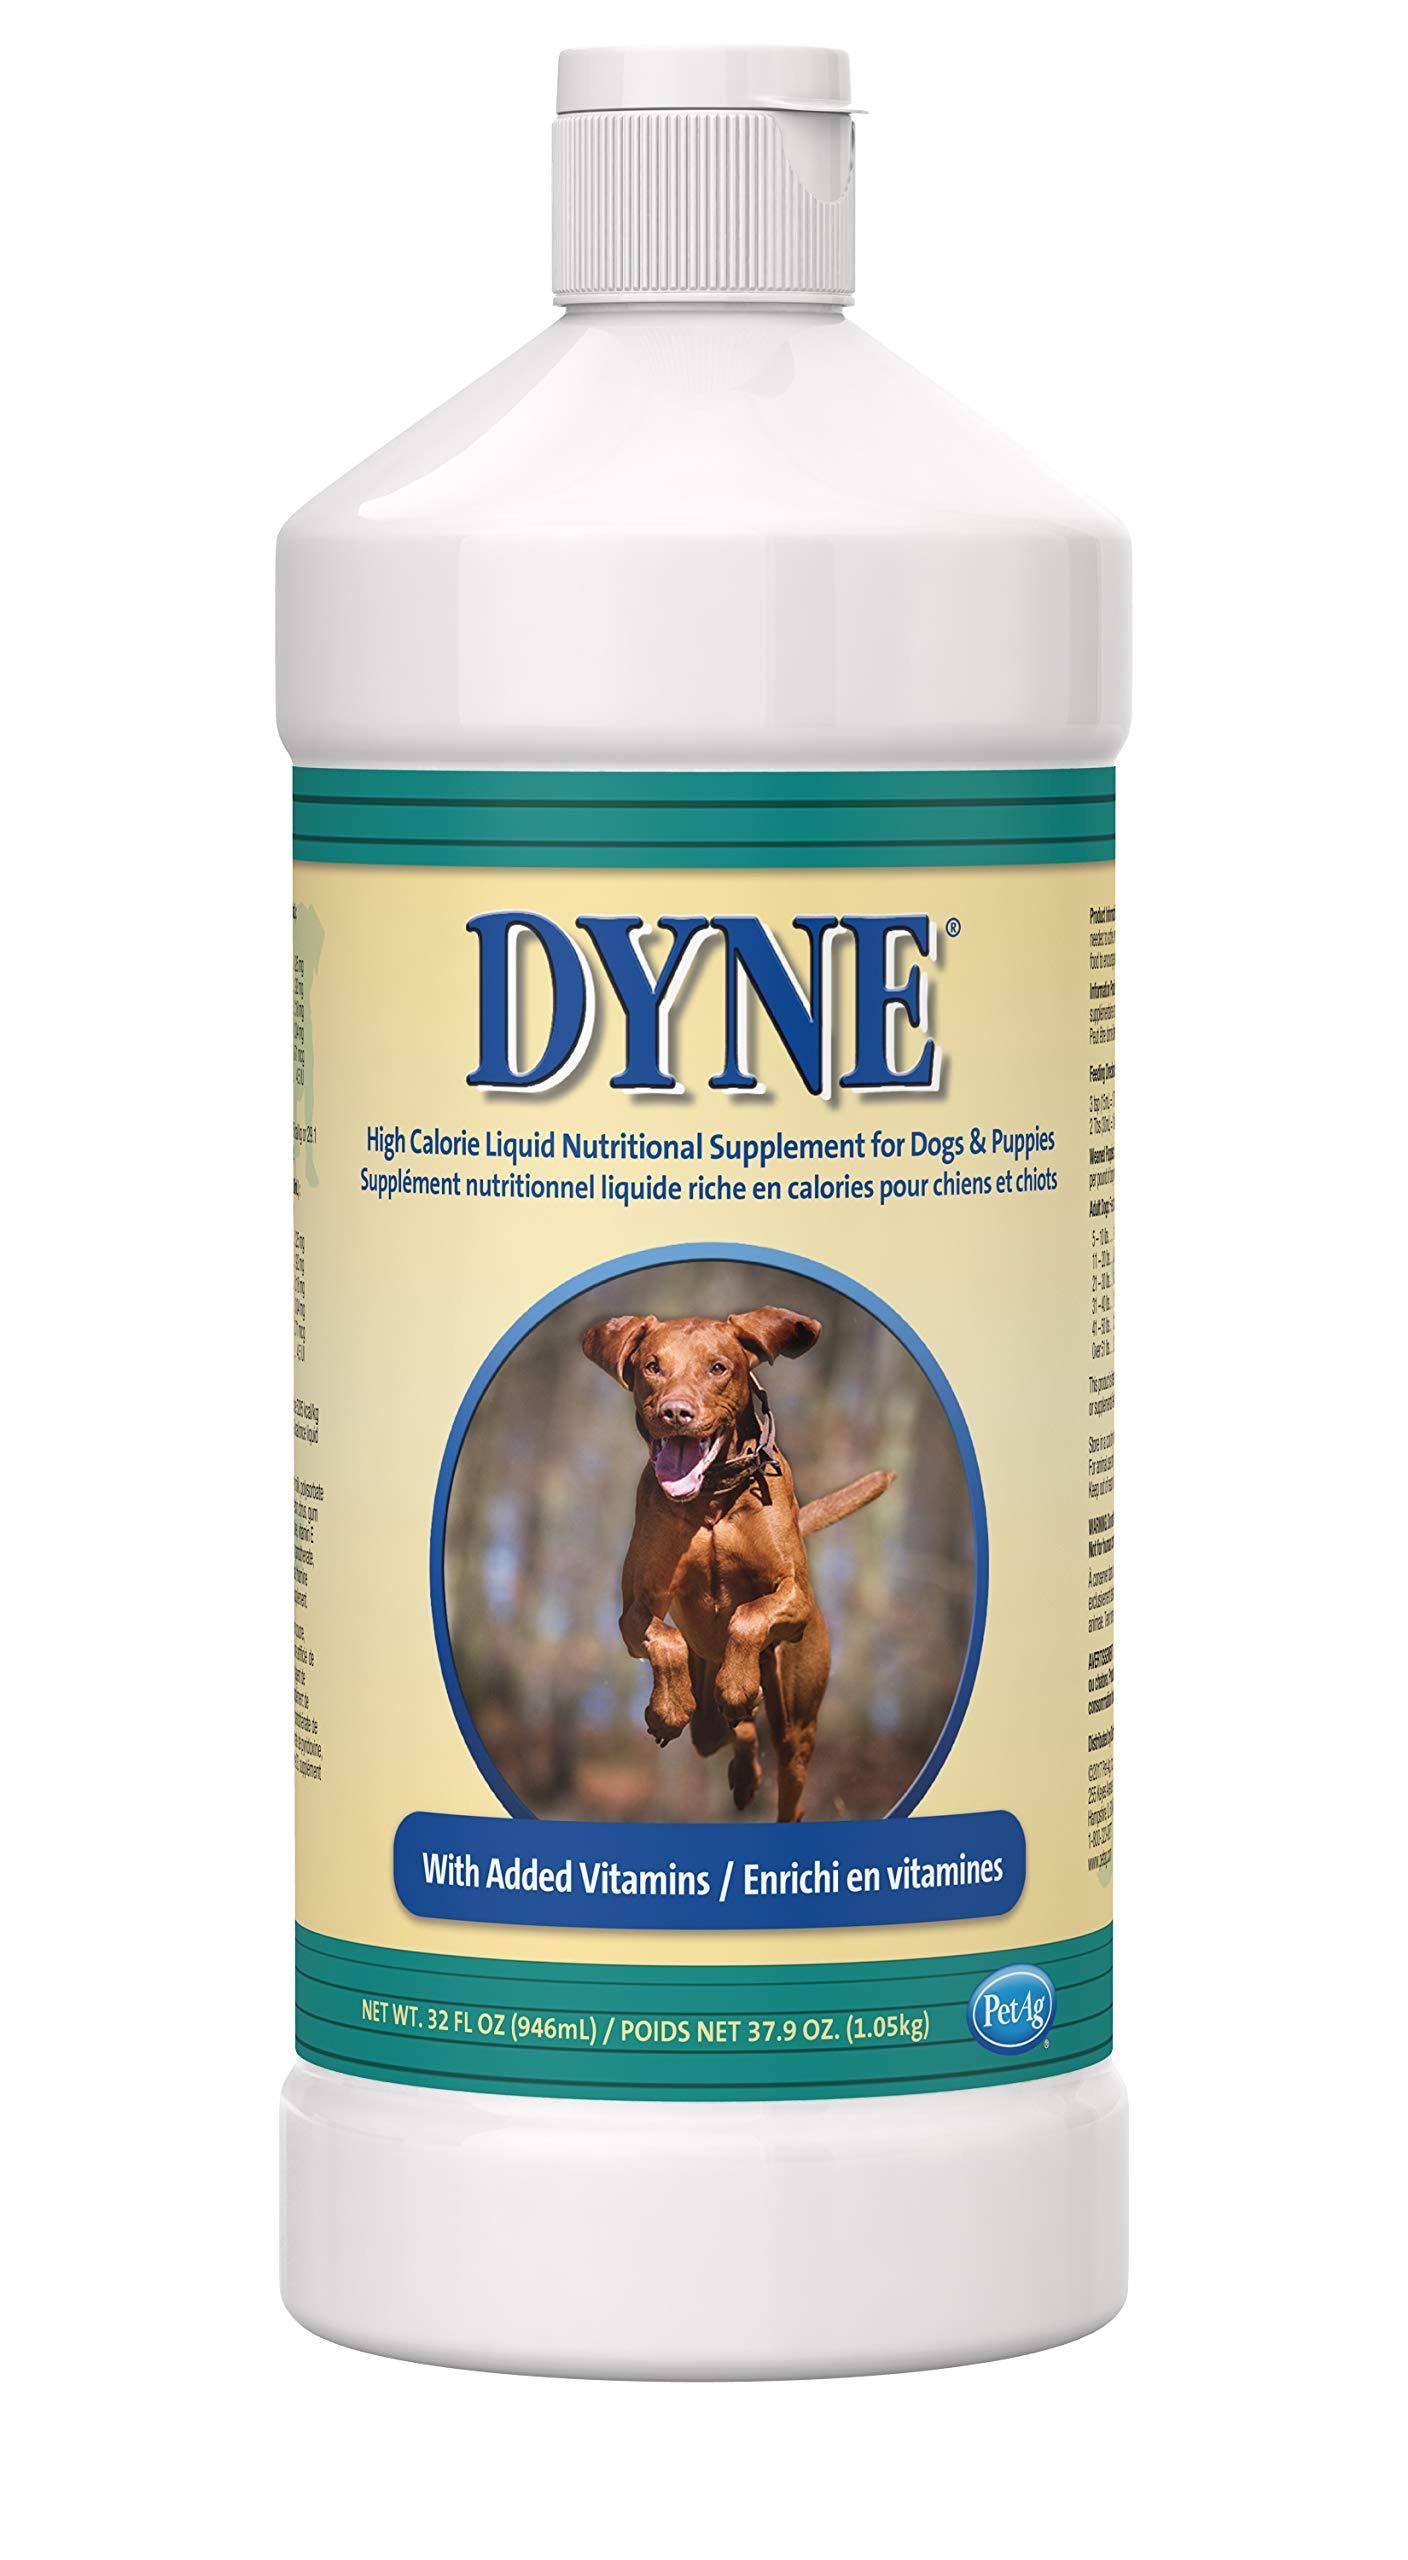 Dyne High Energy Dog Supplement - 32oz